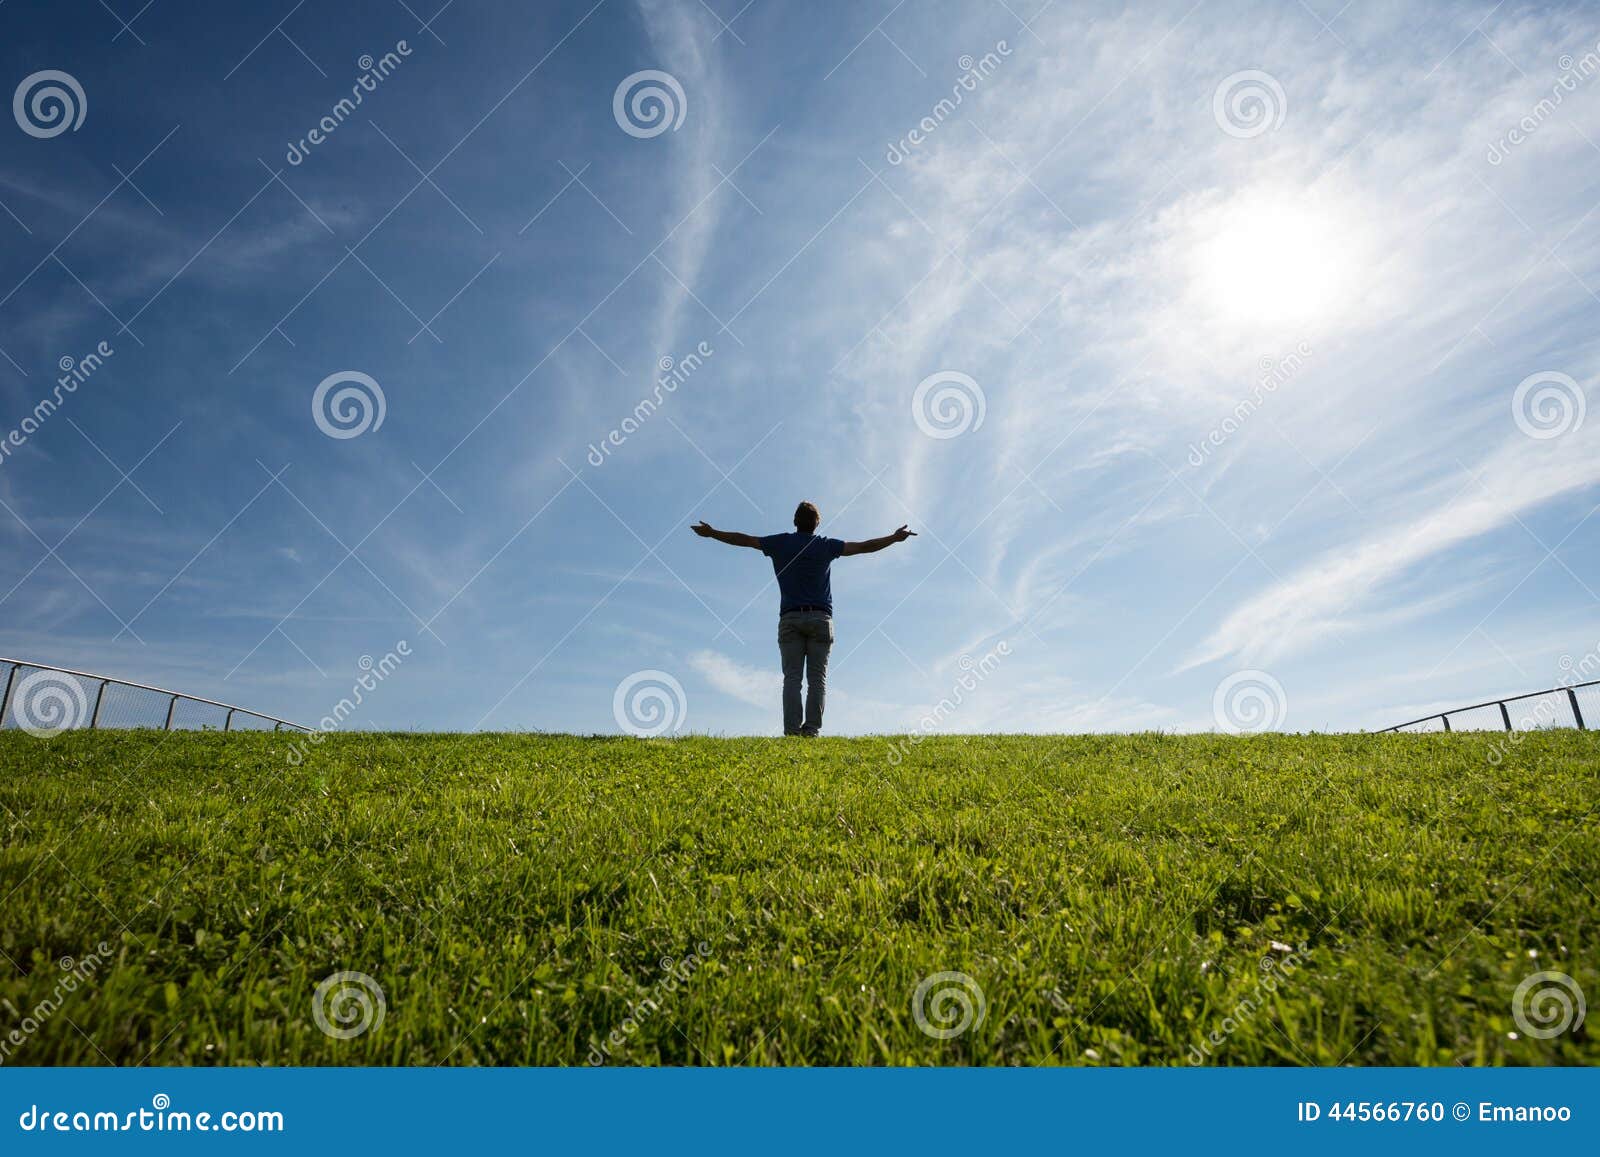 man standing on grass in sunlight